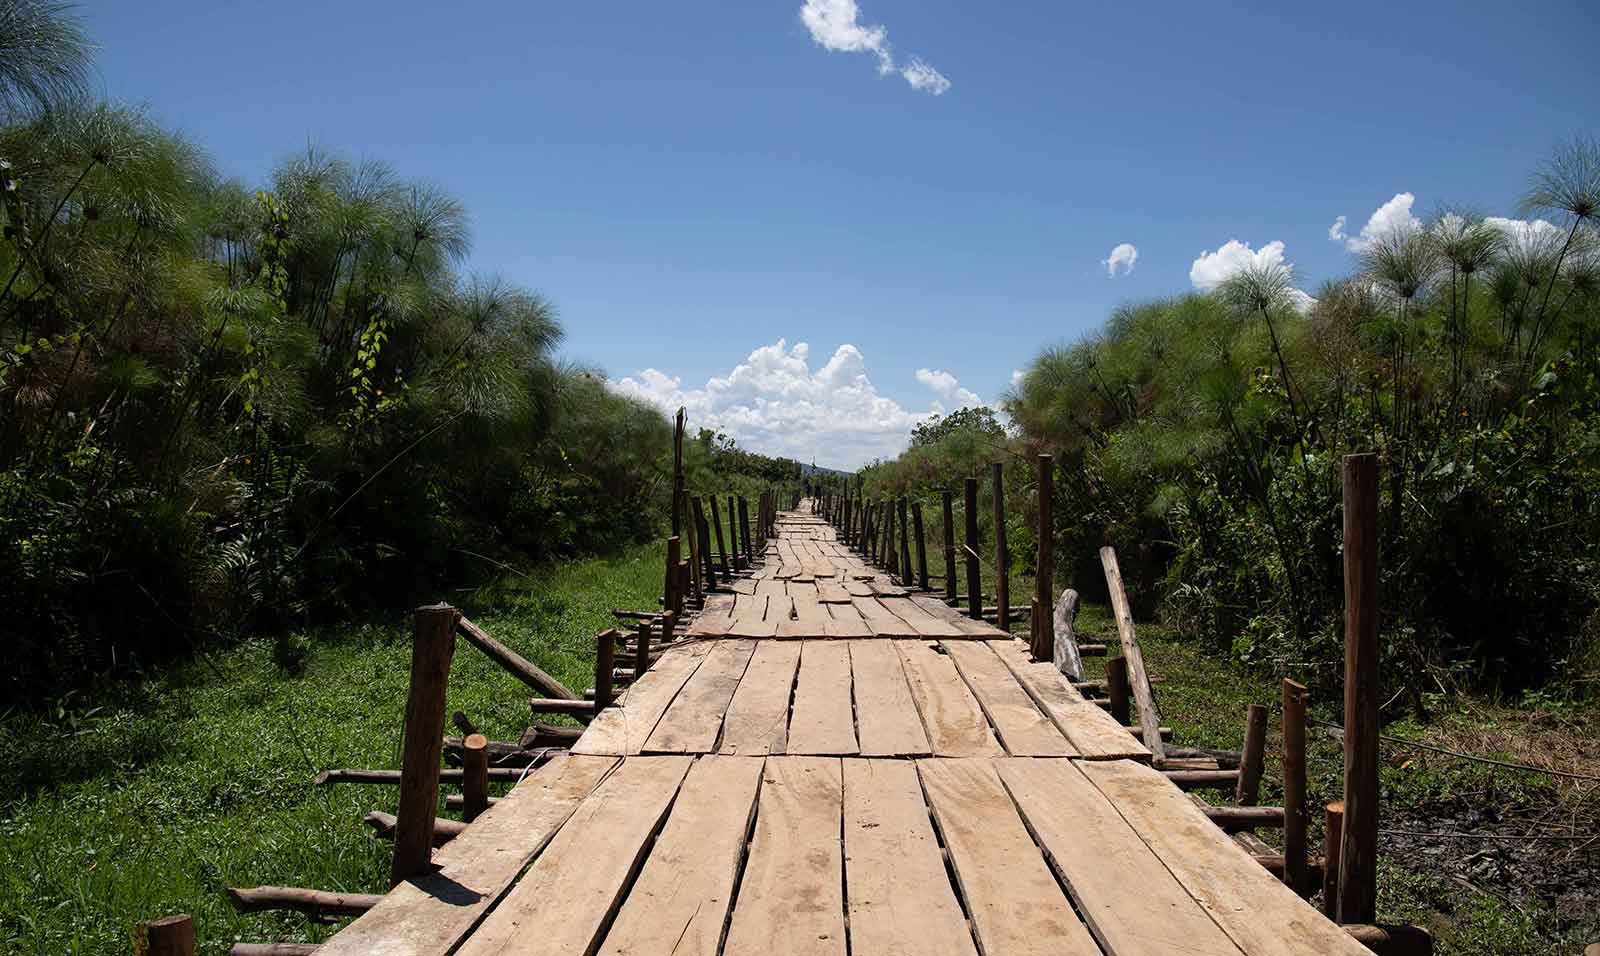 Photo of footbridge connecting mainland with Lunkulu Island